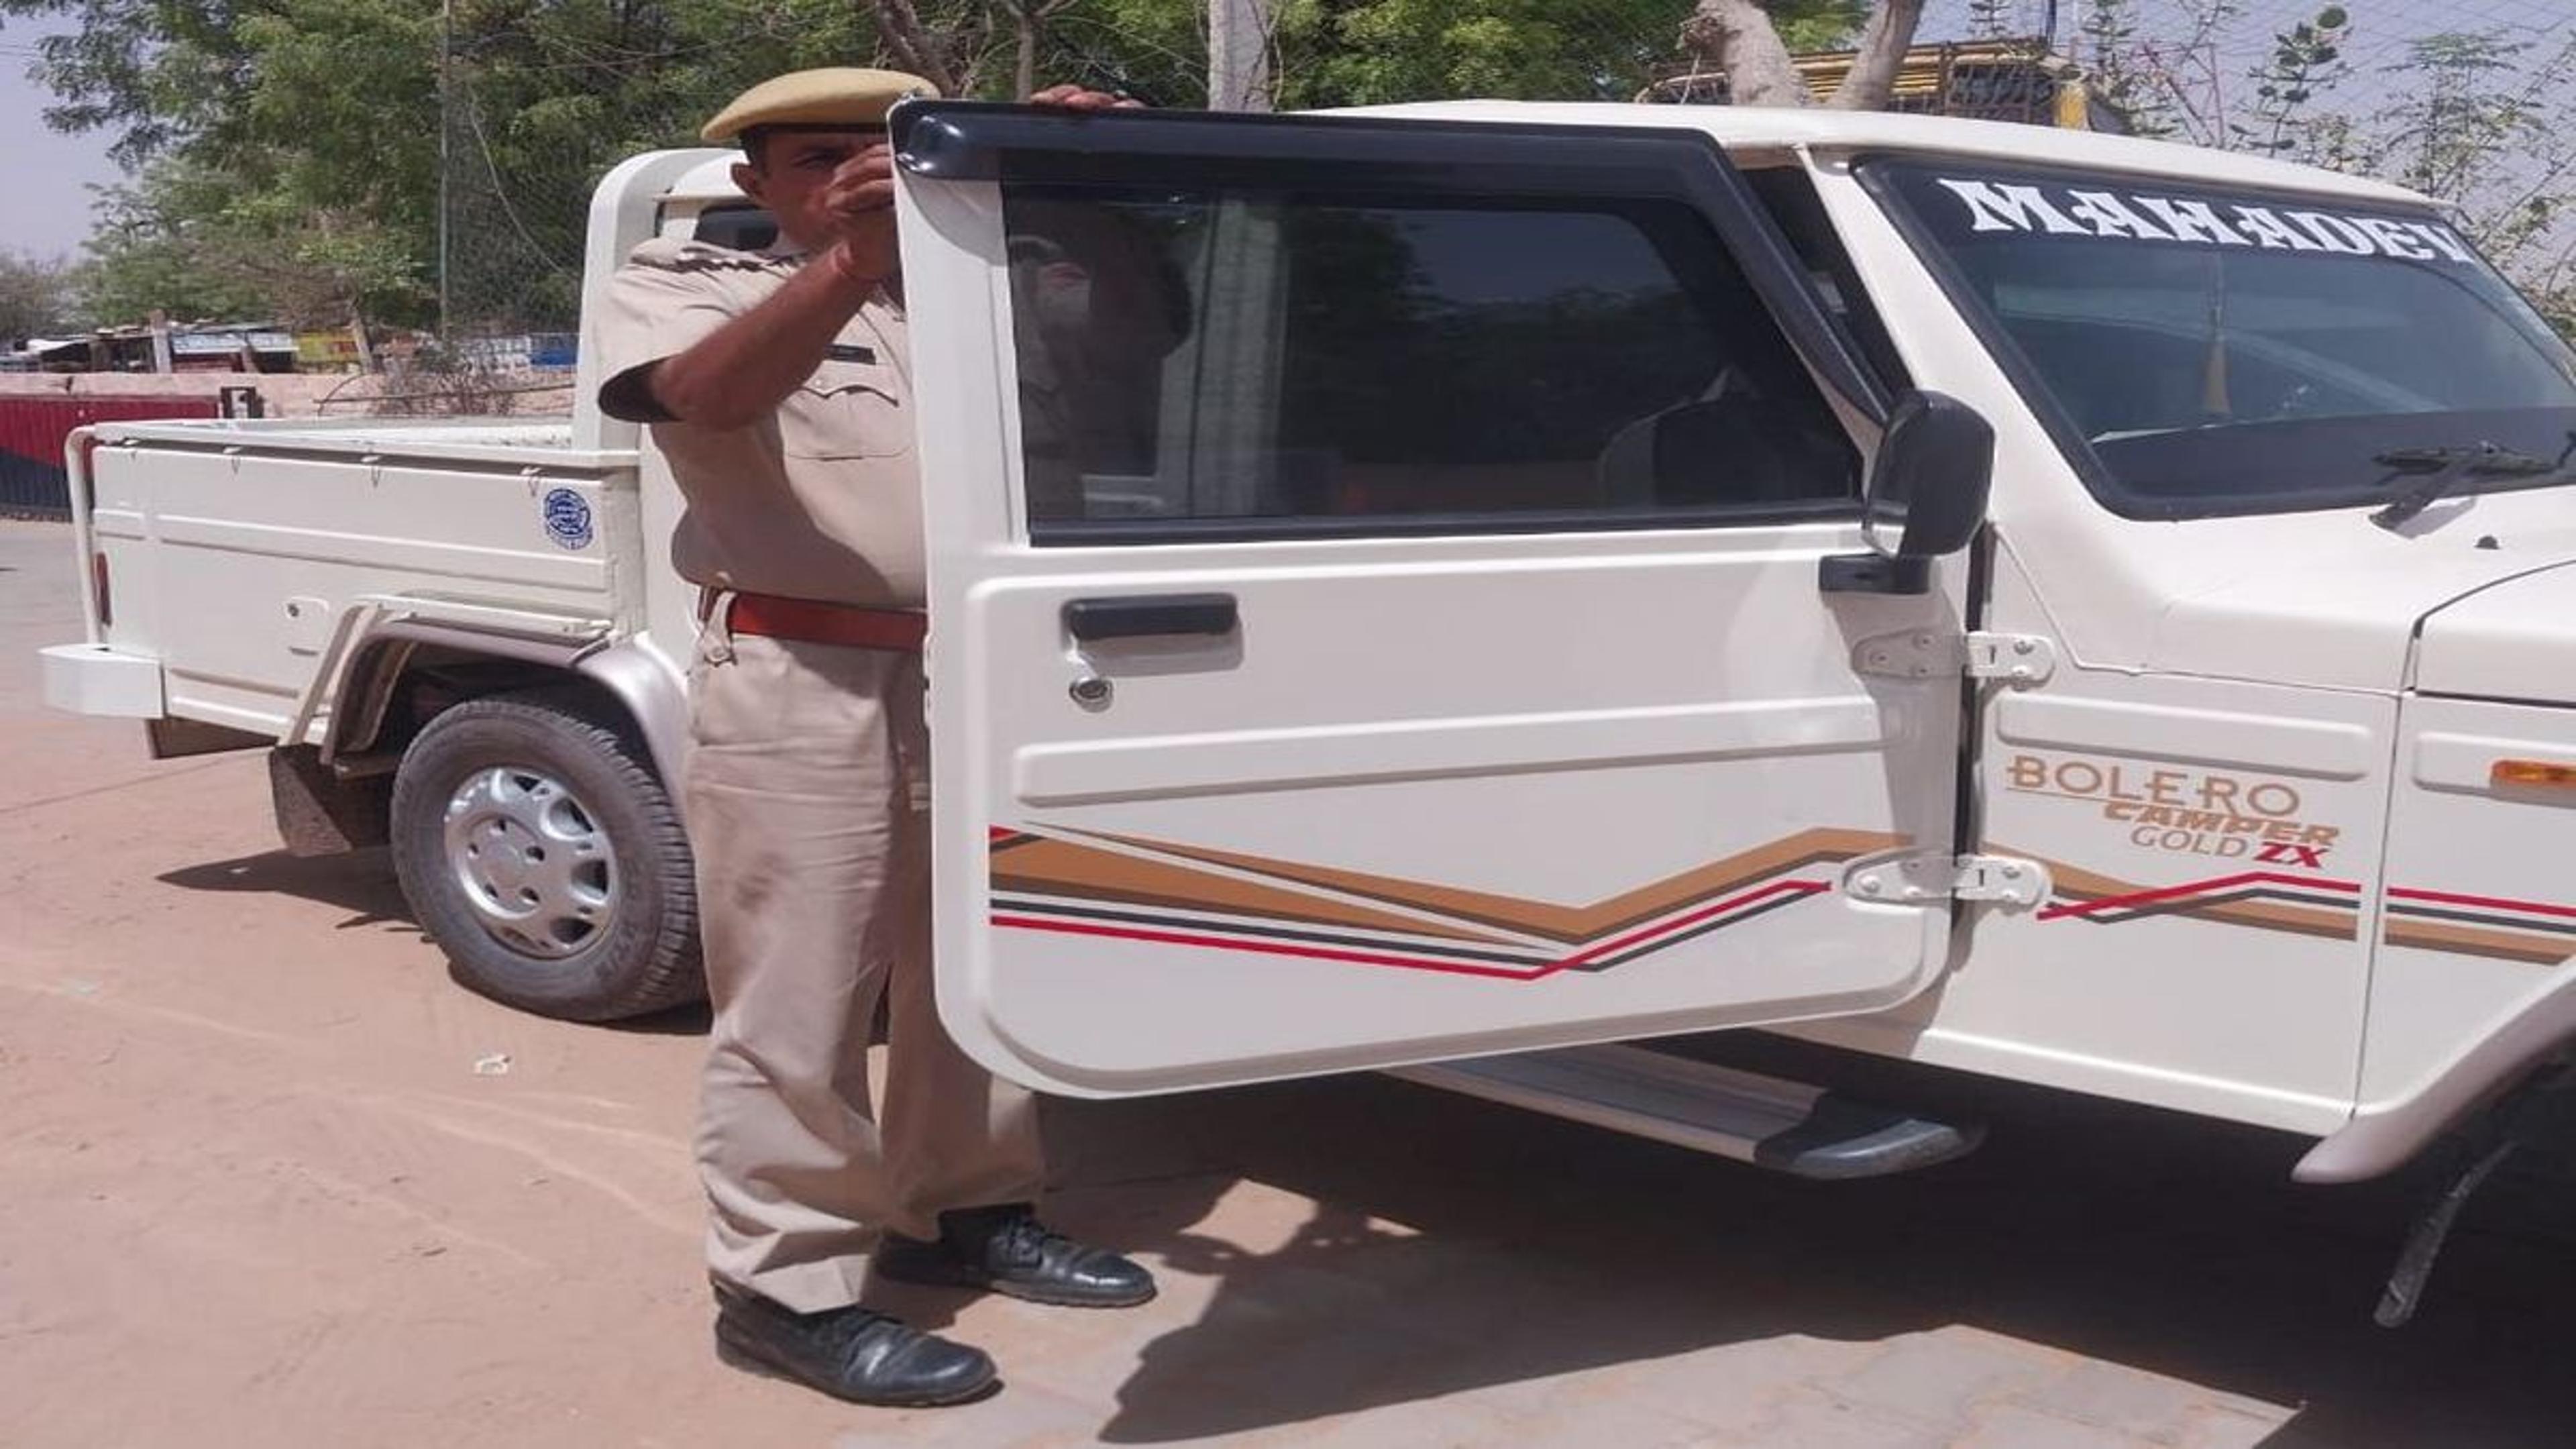 Jodhpur Crime : काले शीशे व बिना नम्बर वाहन लेकर न निकलें, पुलिस कर रही यह
कार्रवाई…